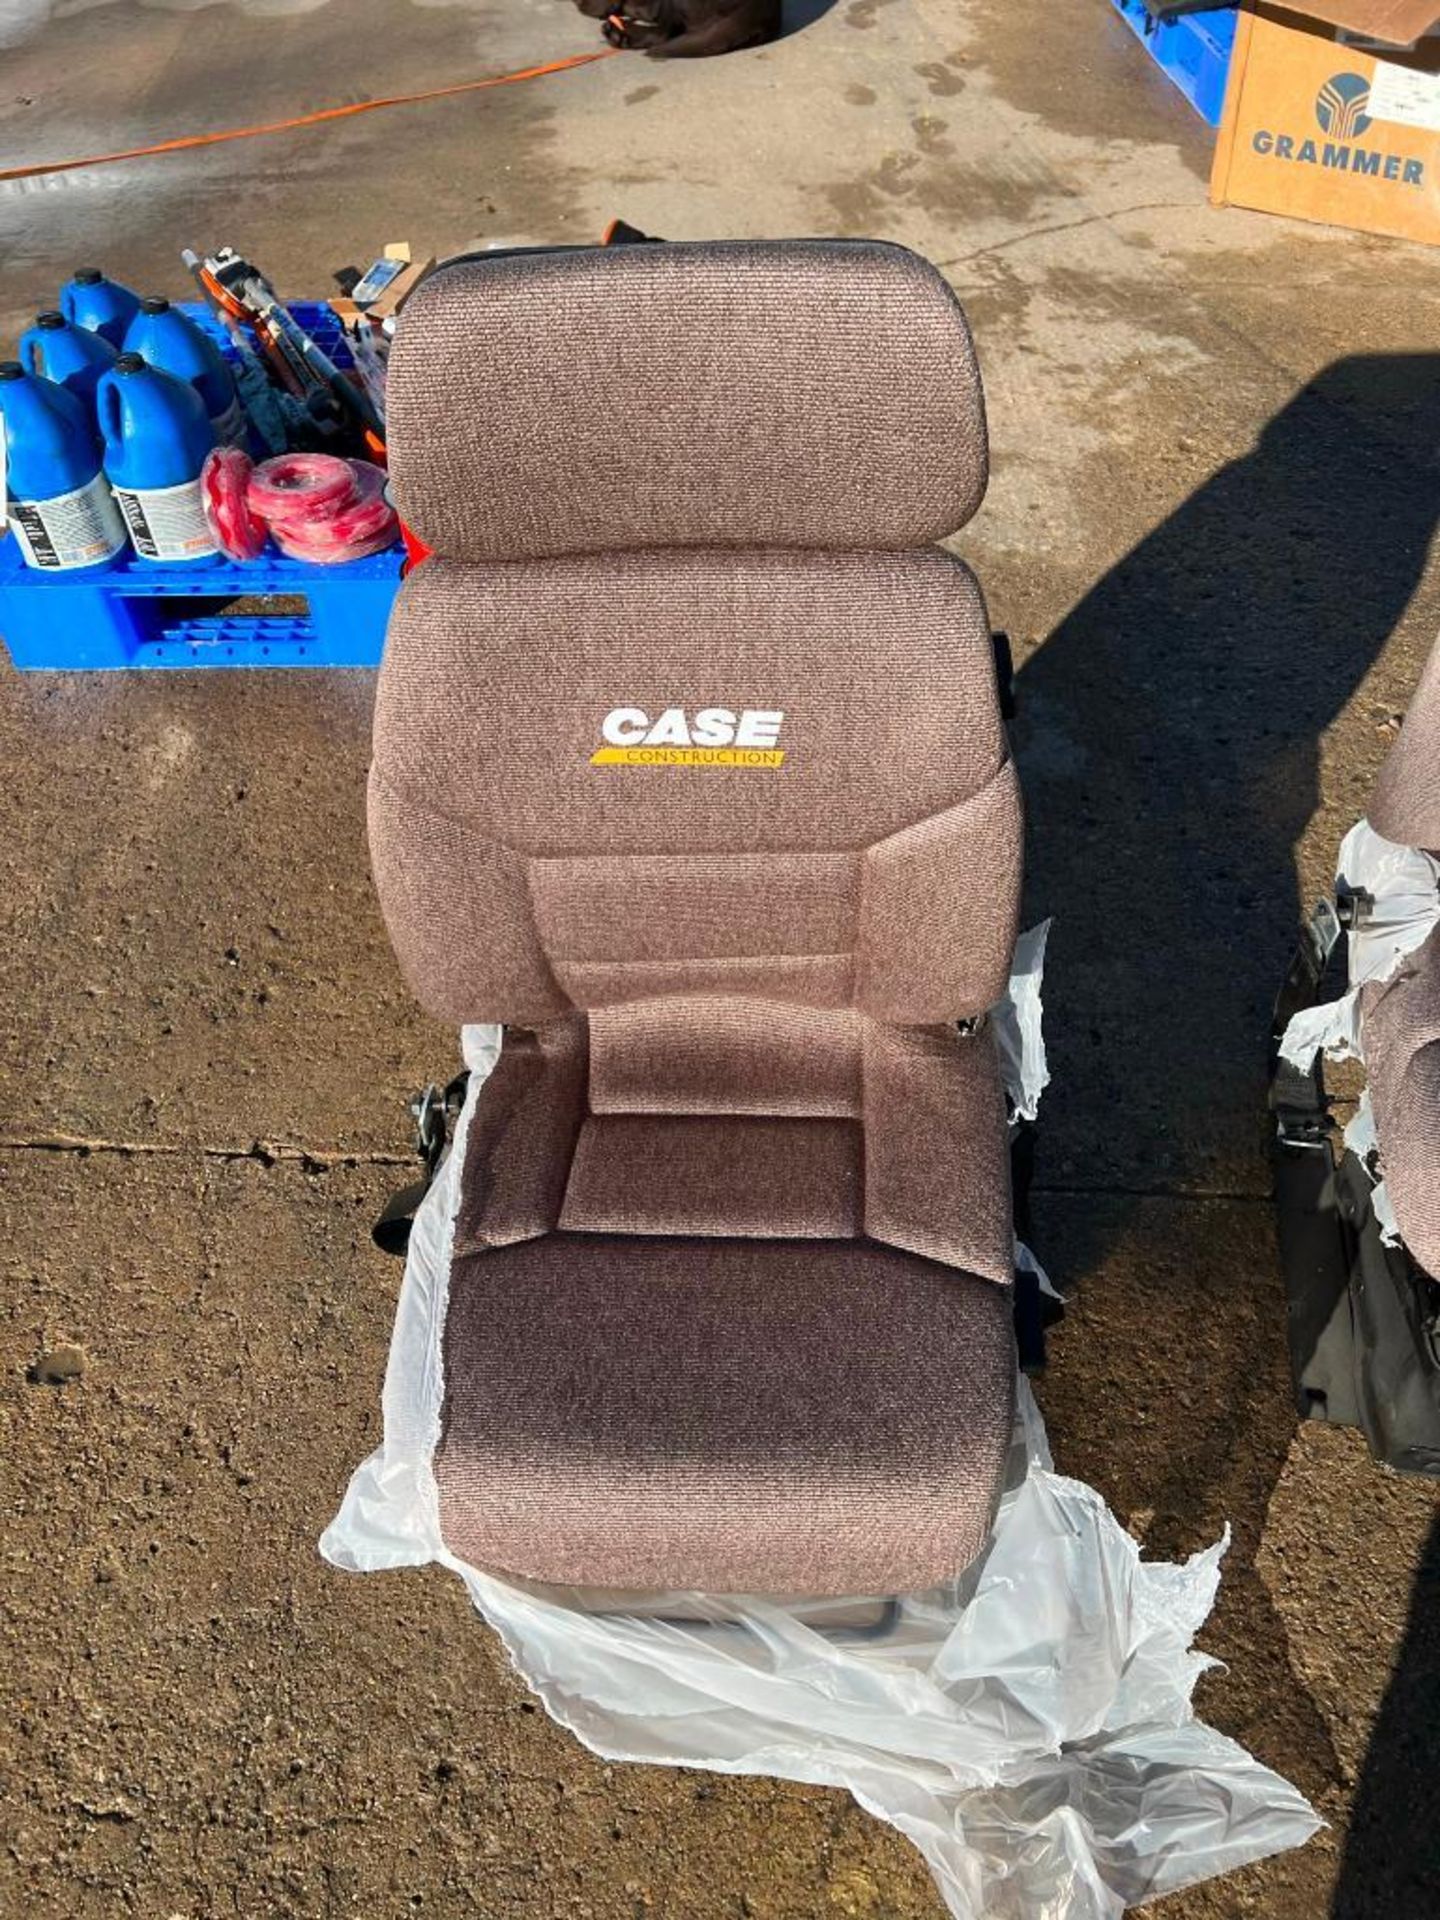 (1) CASE Dozer Seat Tension Ride Sears Manufacturing. Located in Mt. Pleasant, IA.